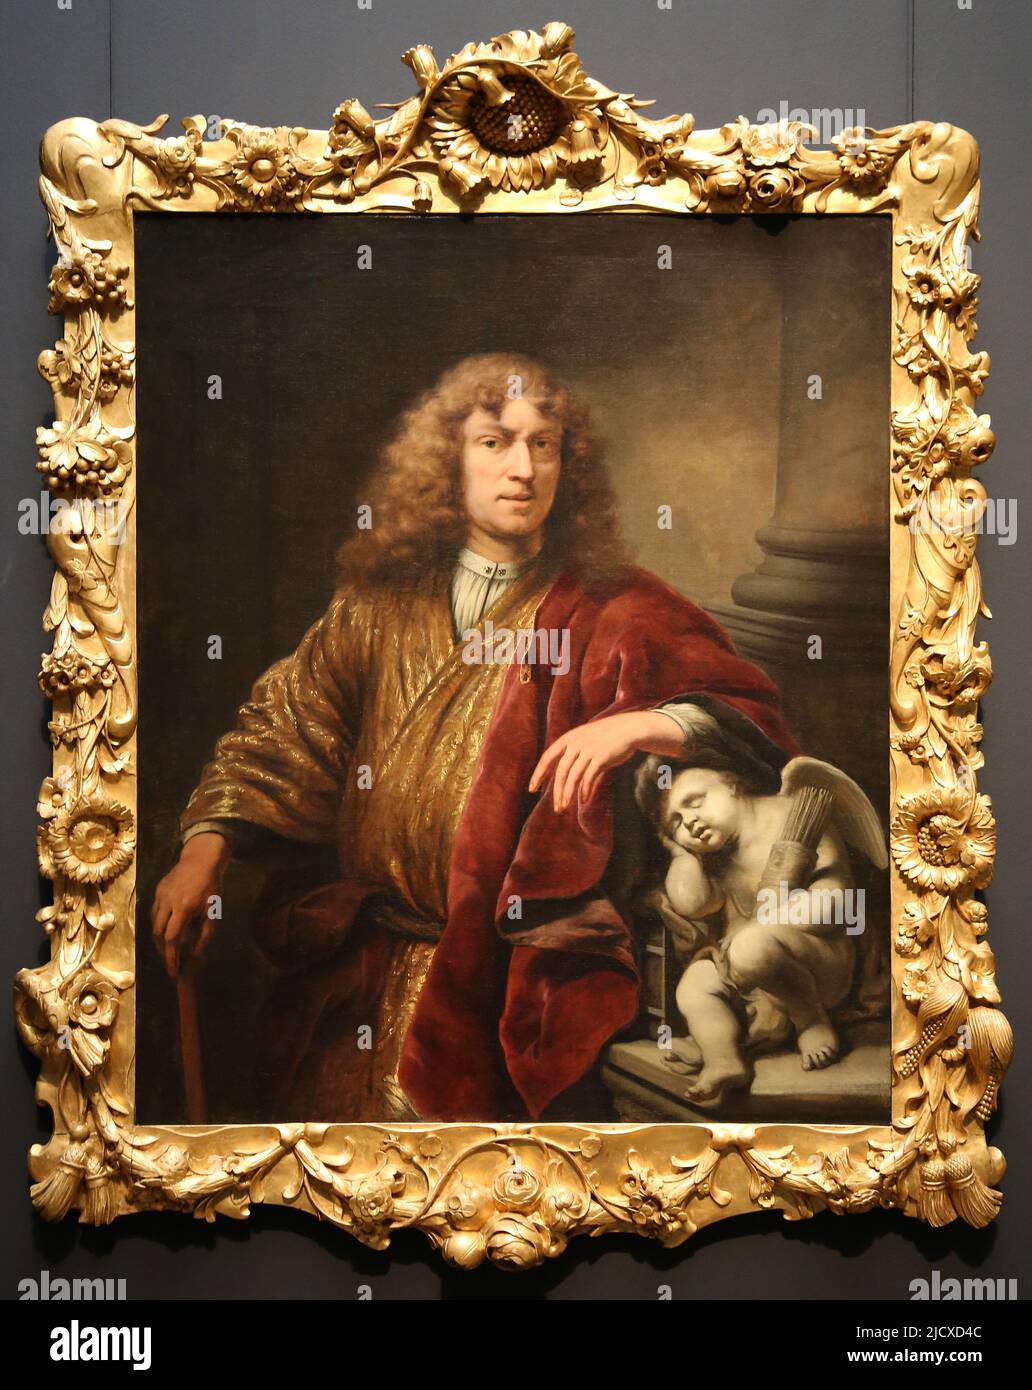 Ferdinand Bol (1616-1680). Selbstporträt. Öl auf Leinwand, c. 1669. Rijksmuseum. Amsterdam. Niederlande. Stockfoto